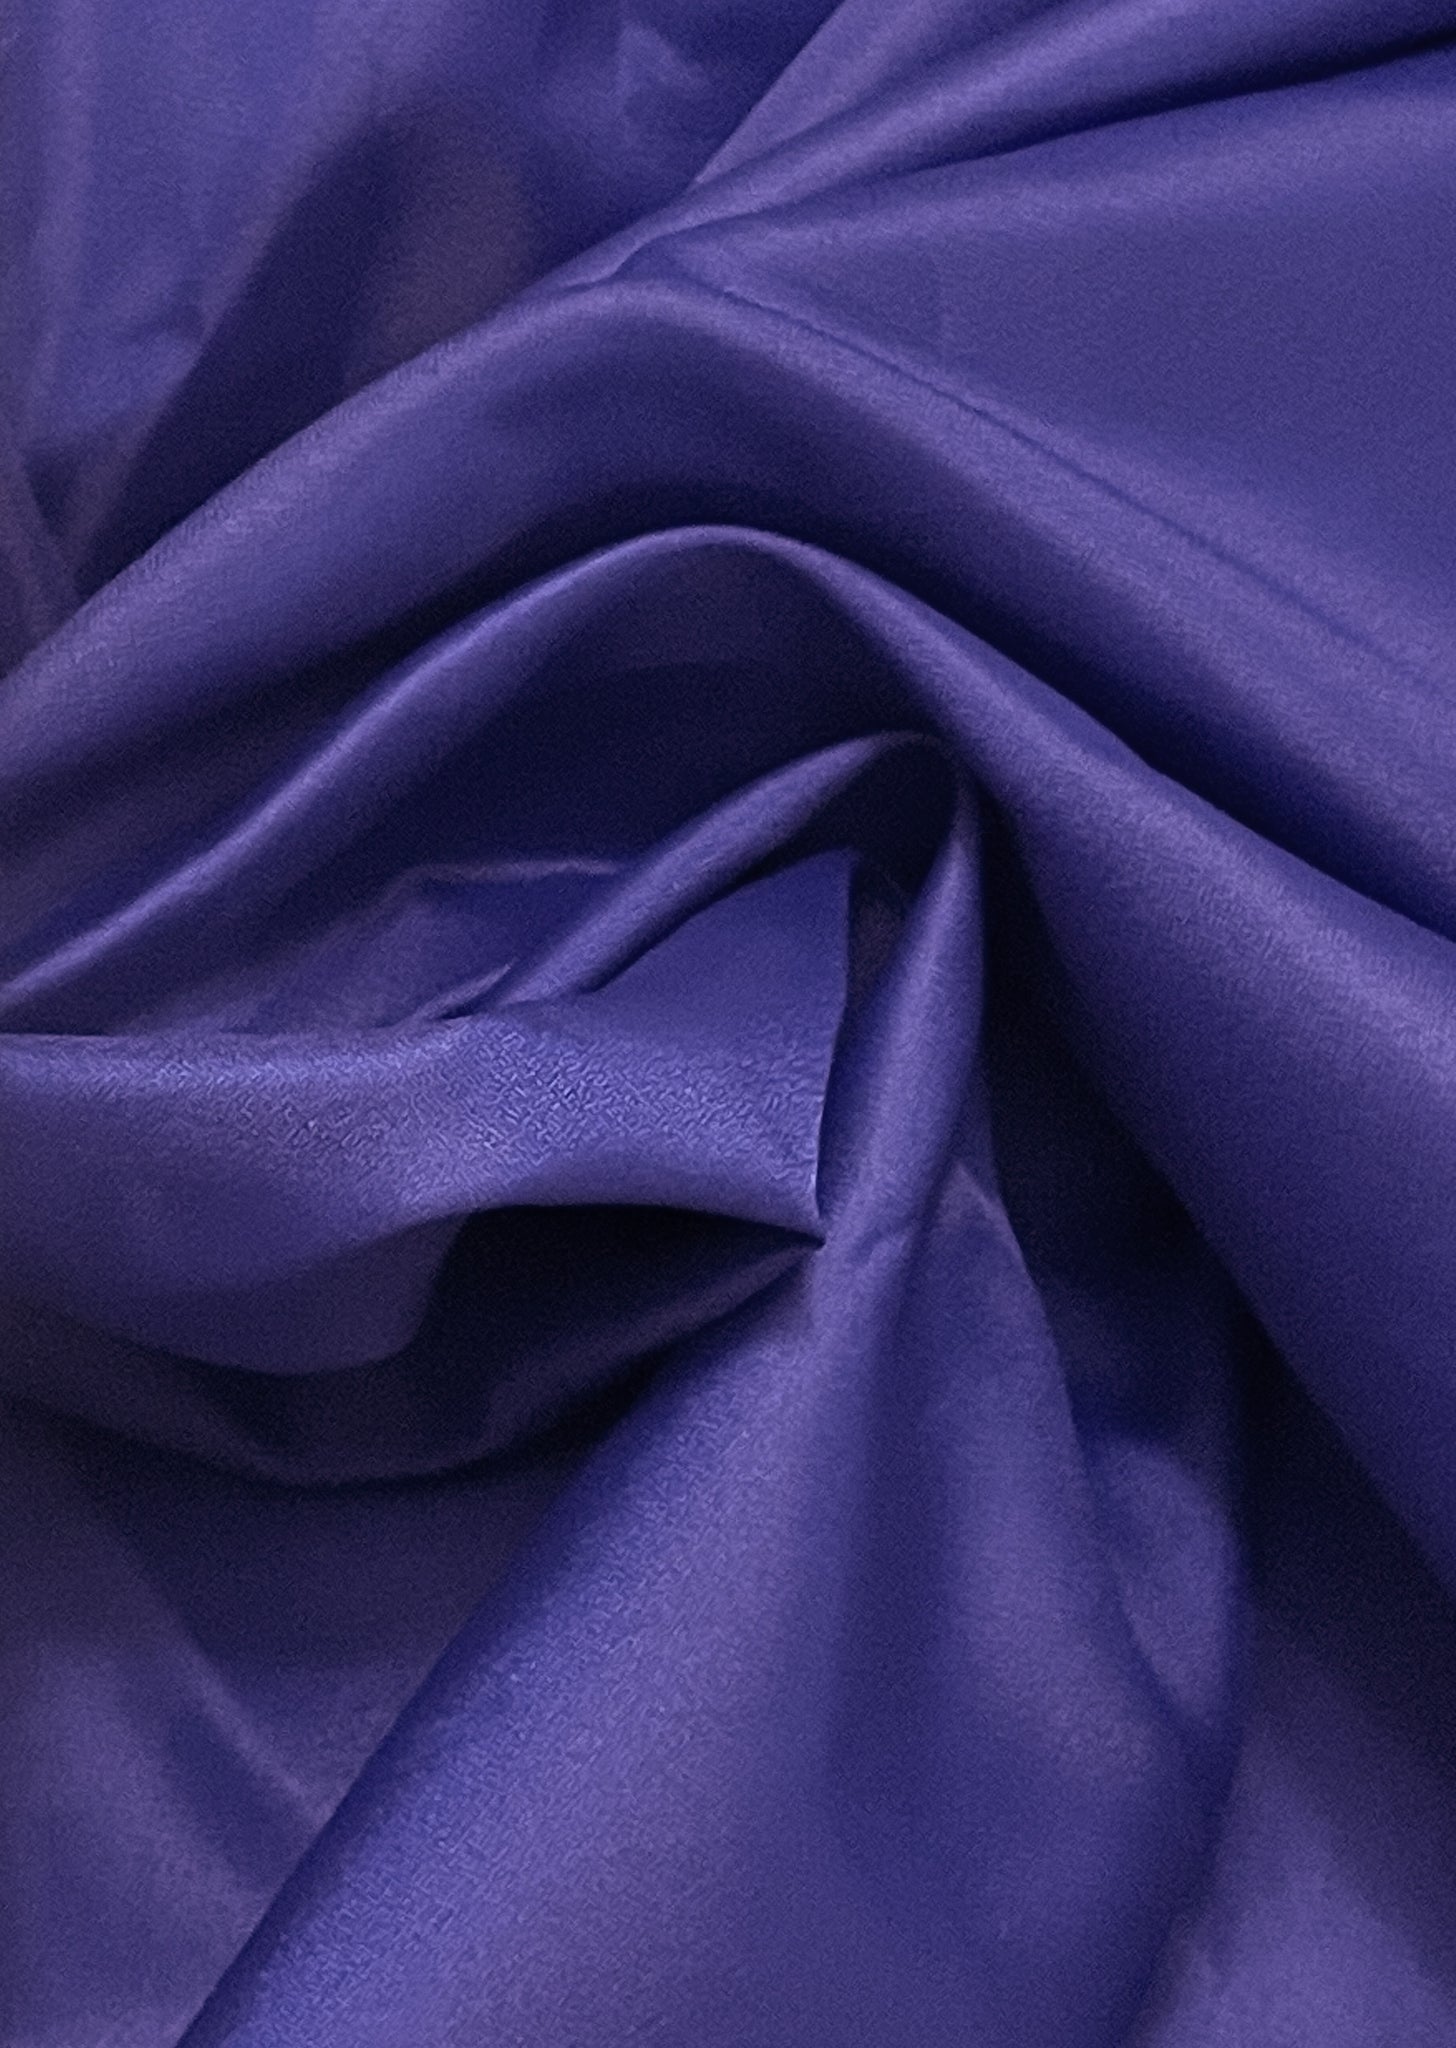 SALE 2 1/4 YD Polyester - Royal Blue